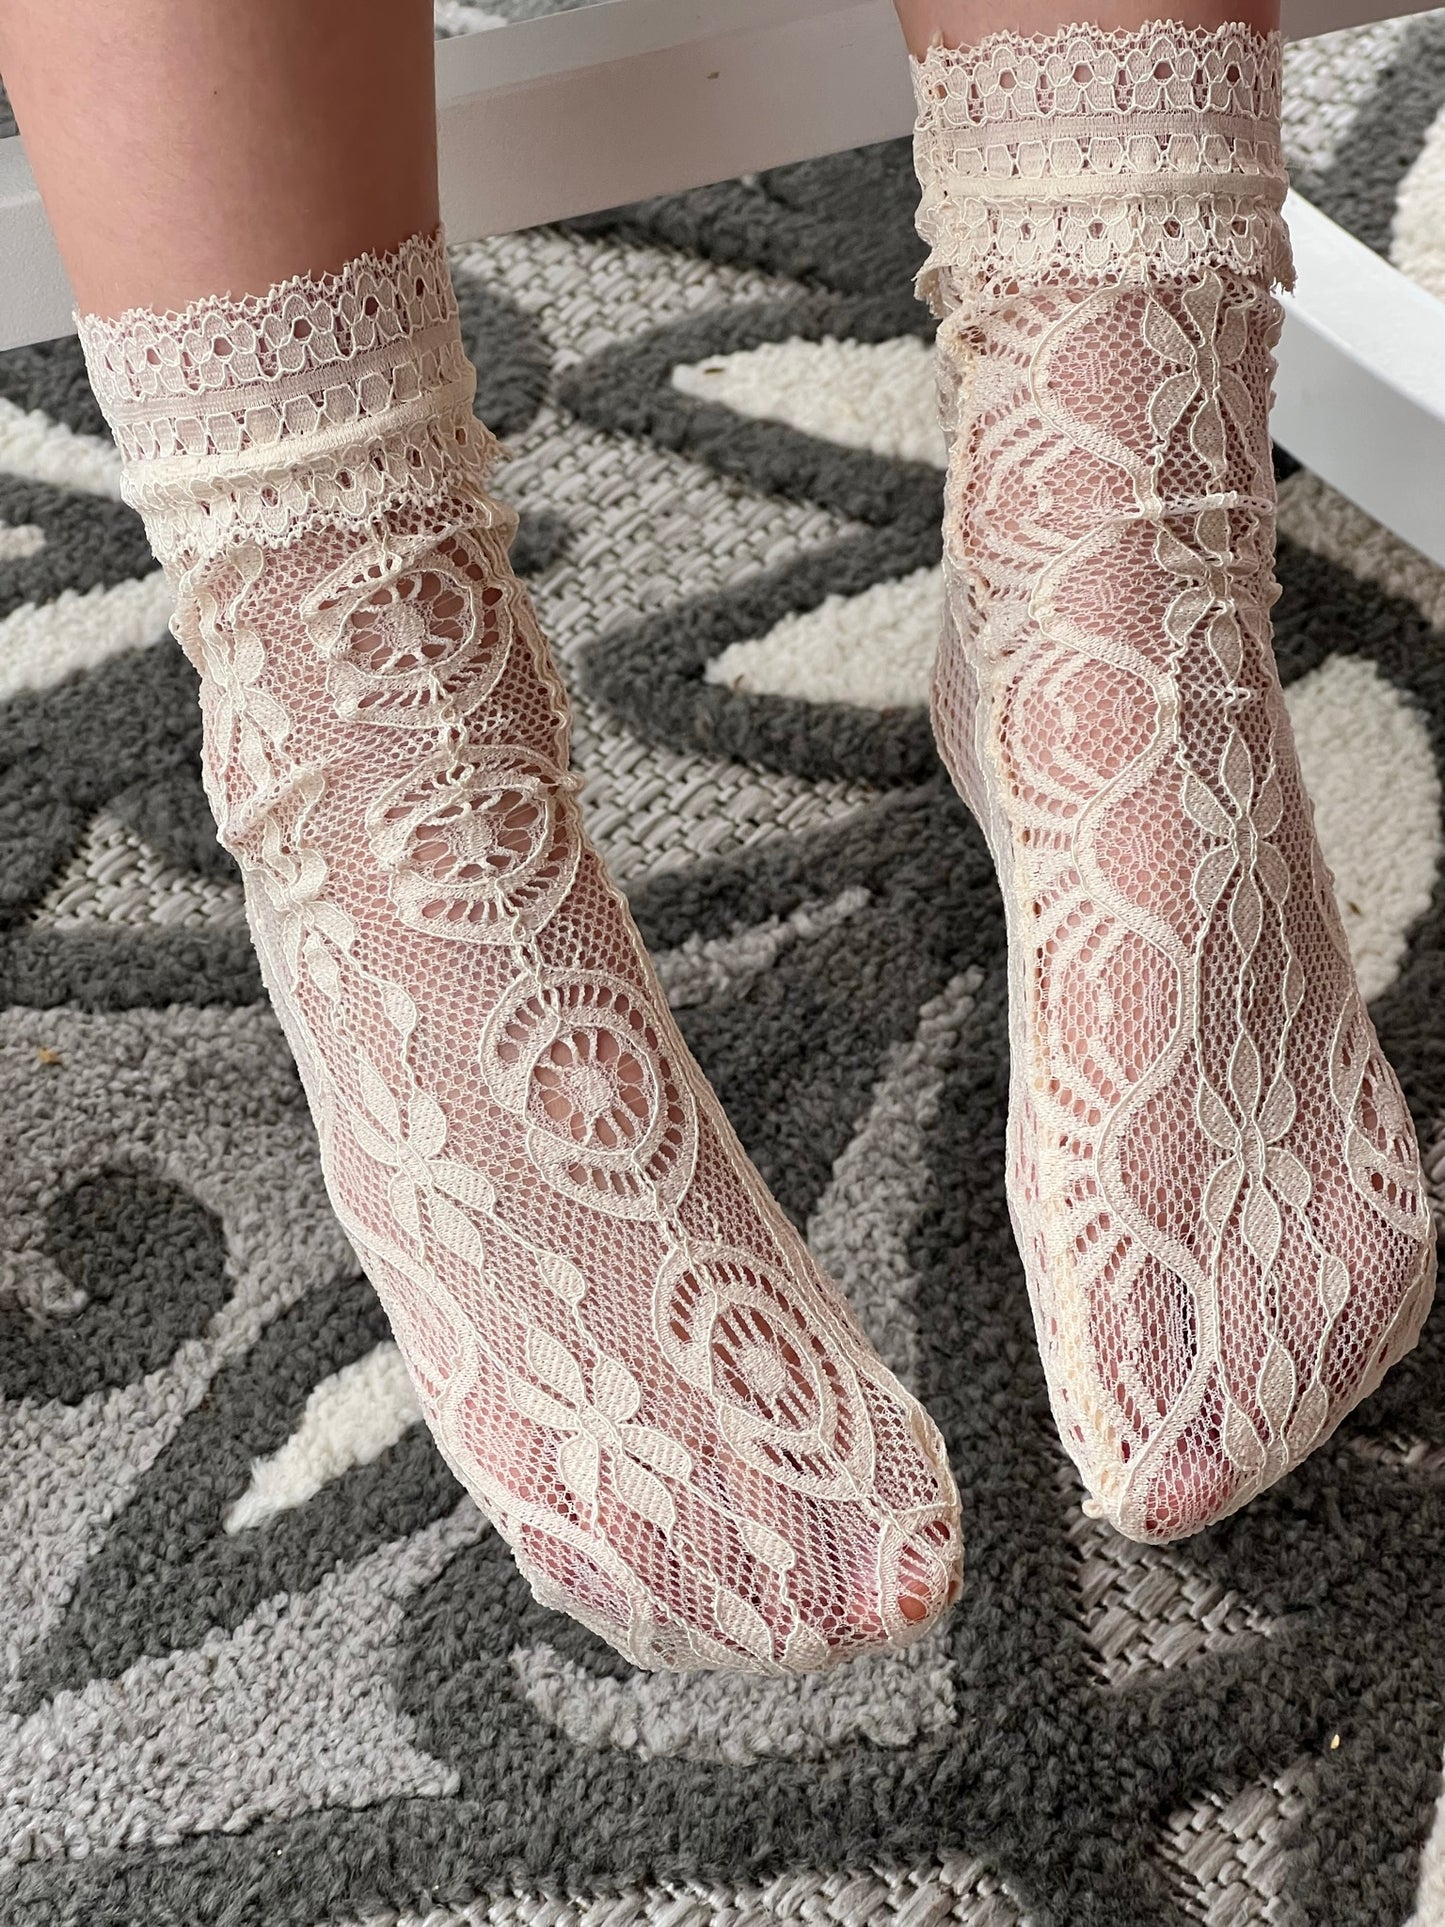 Girls Lace Socks - Short